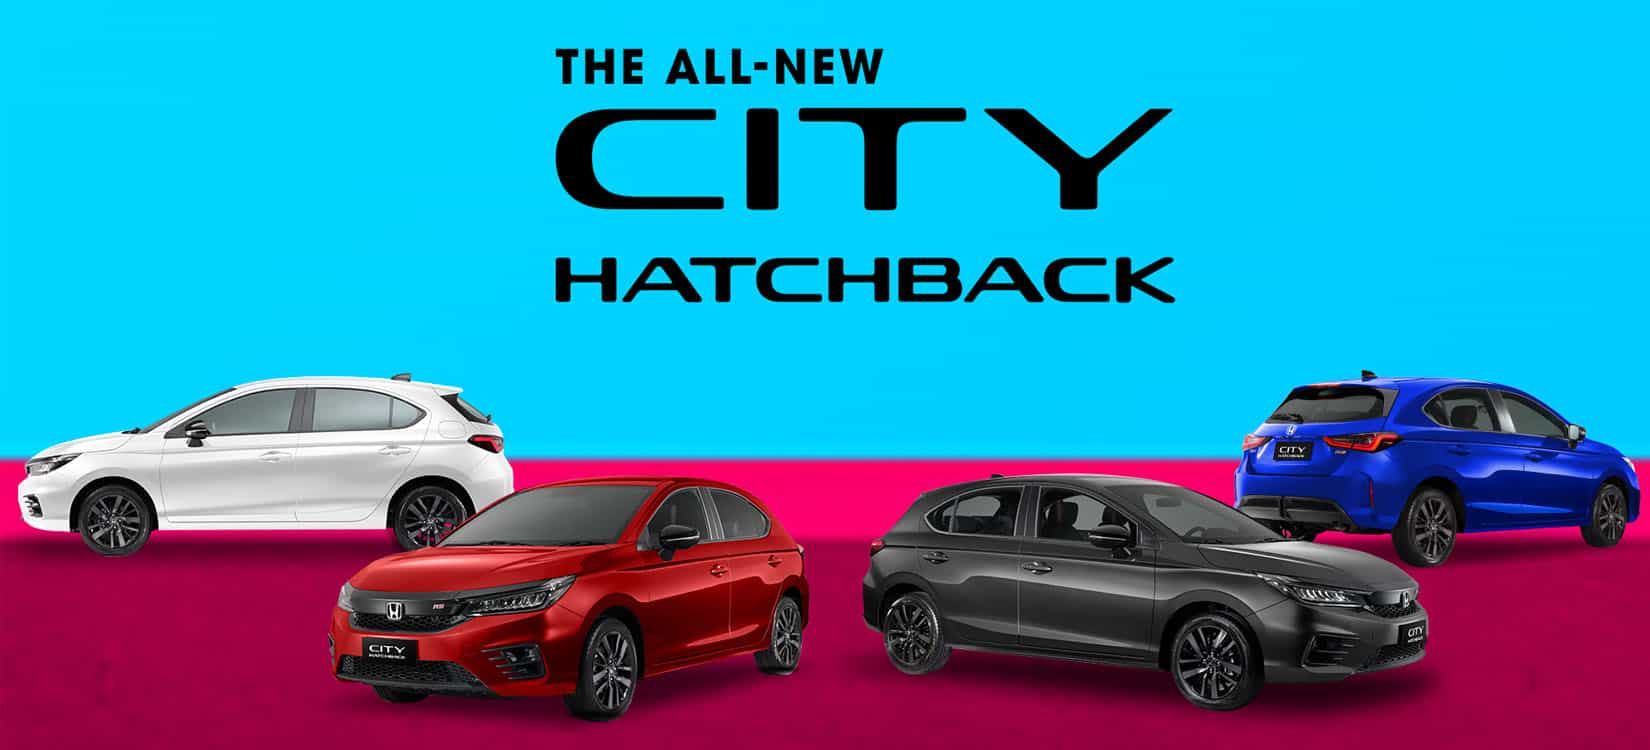 All-New Honda City Hatchback leads country’s B-segment hatchback sales